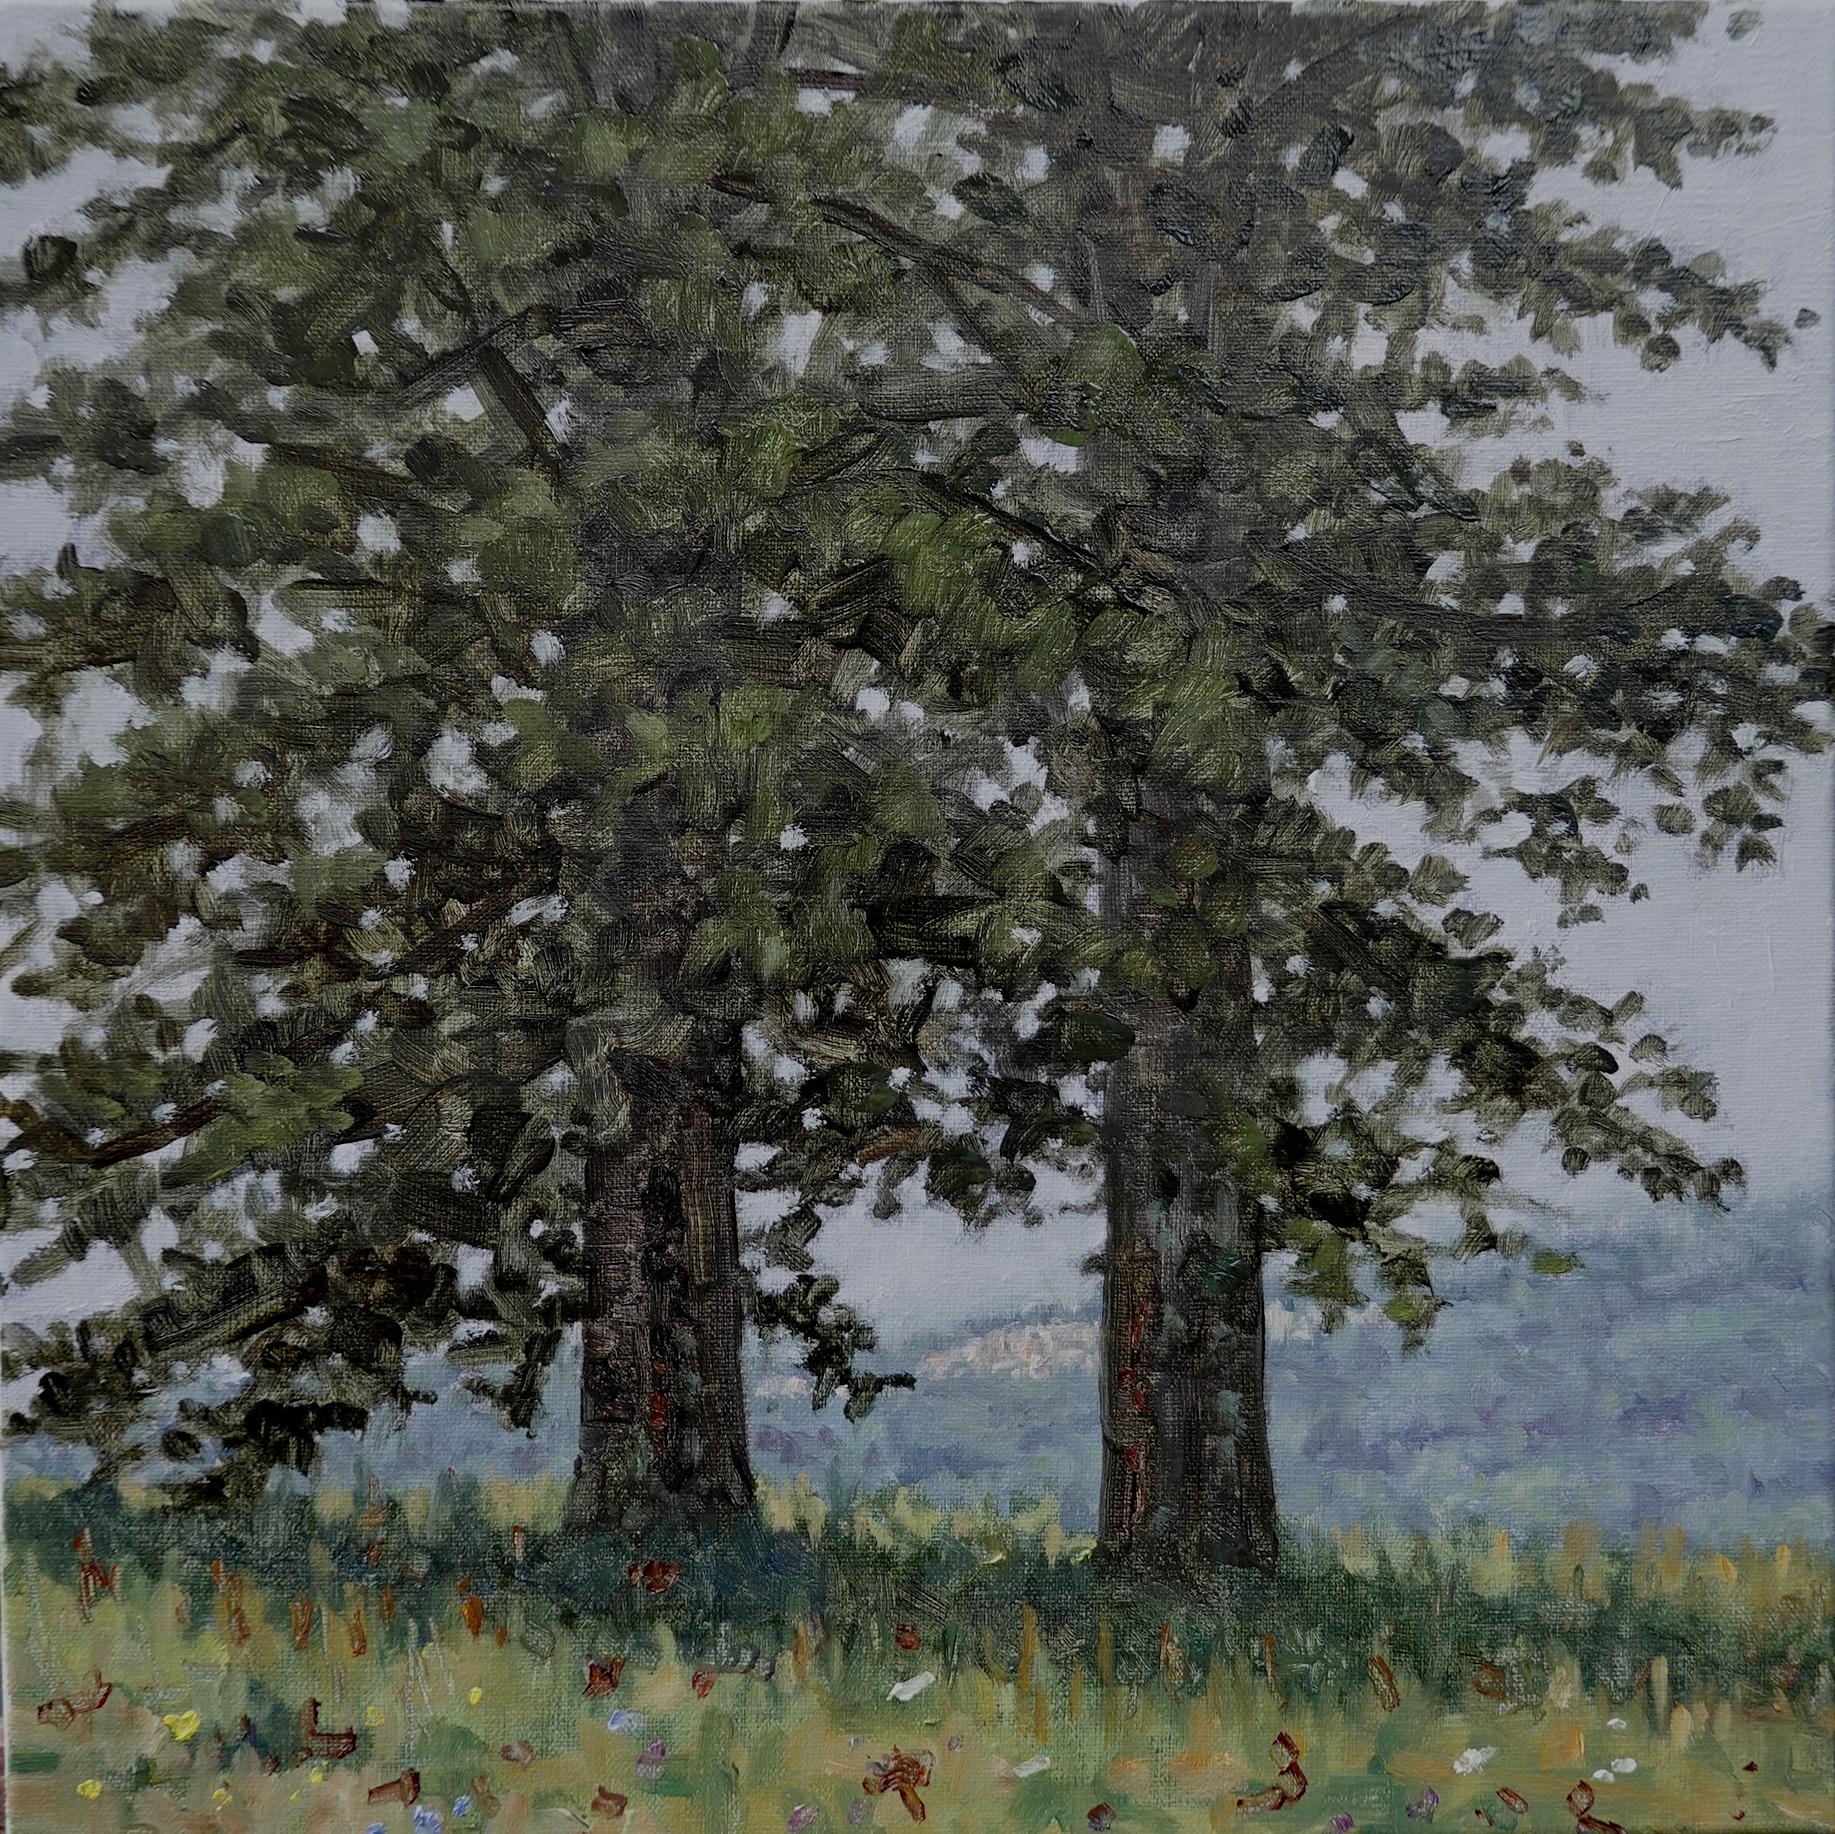 Thomas Sarrantonio Landscape Painting - Field Painting July 14 2021, Green Pine Trees, Grass, Hills, Summer Landscape